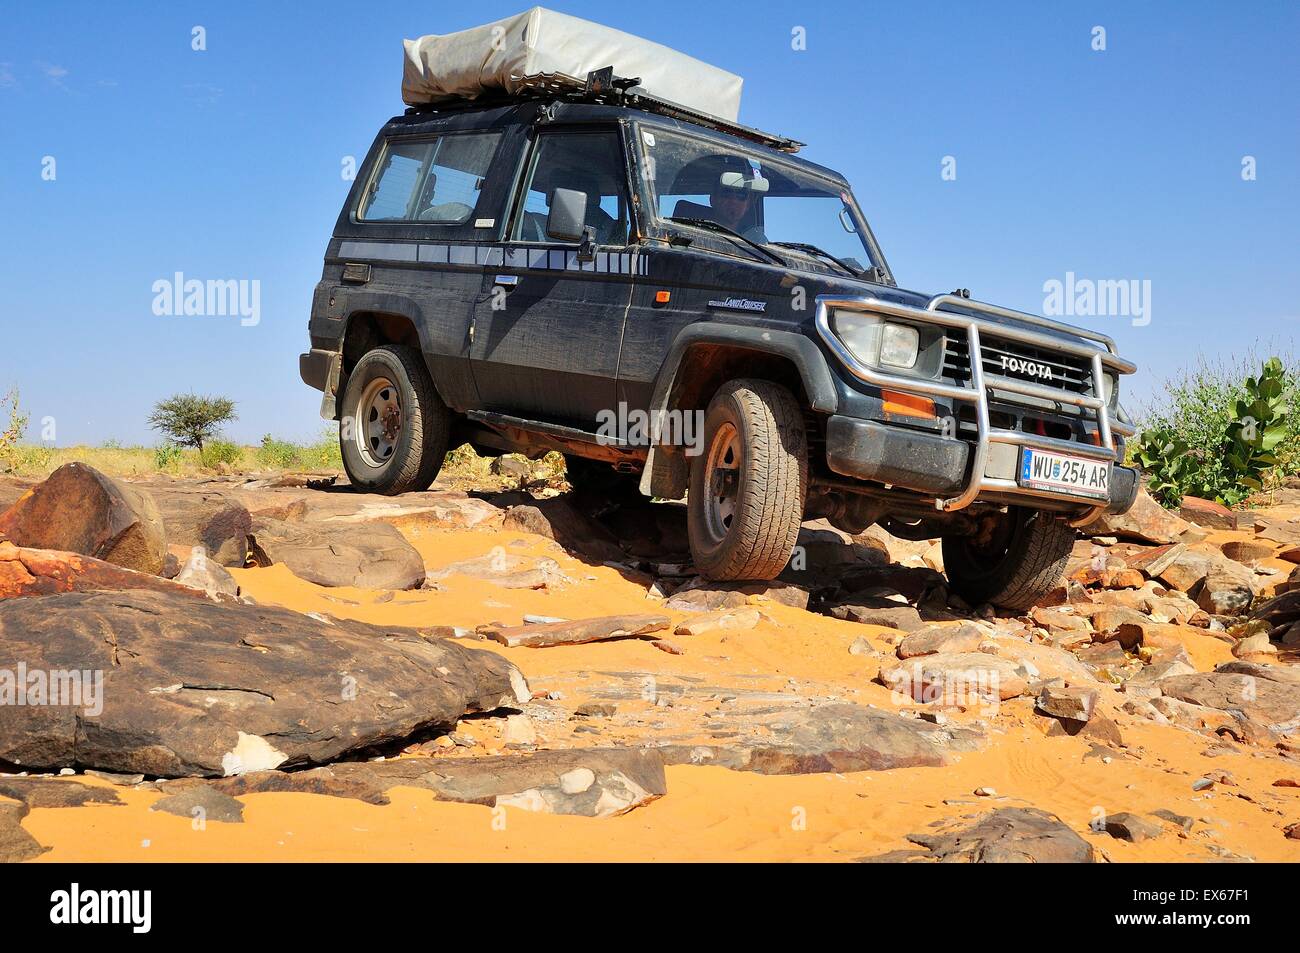 SUV with roof tent on rocky track, route from Atar to Tidjikja, Adrar region, Mauritania Stock Photo